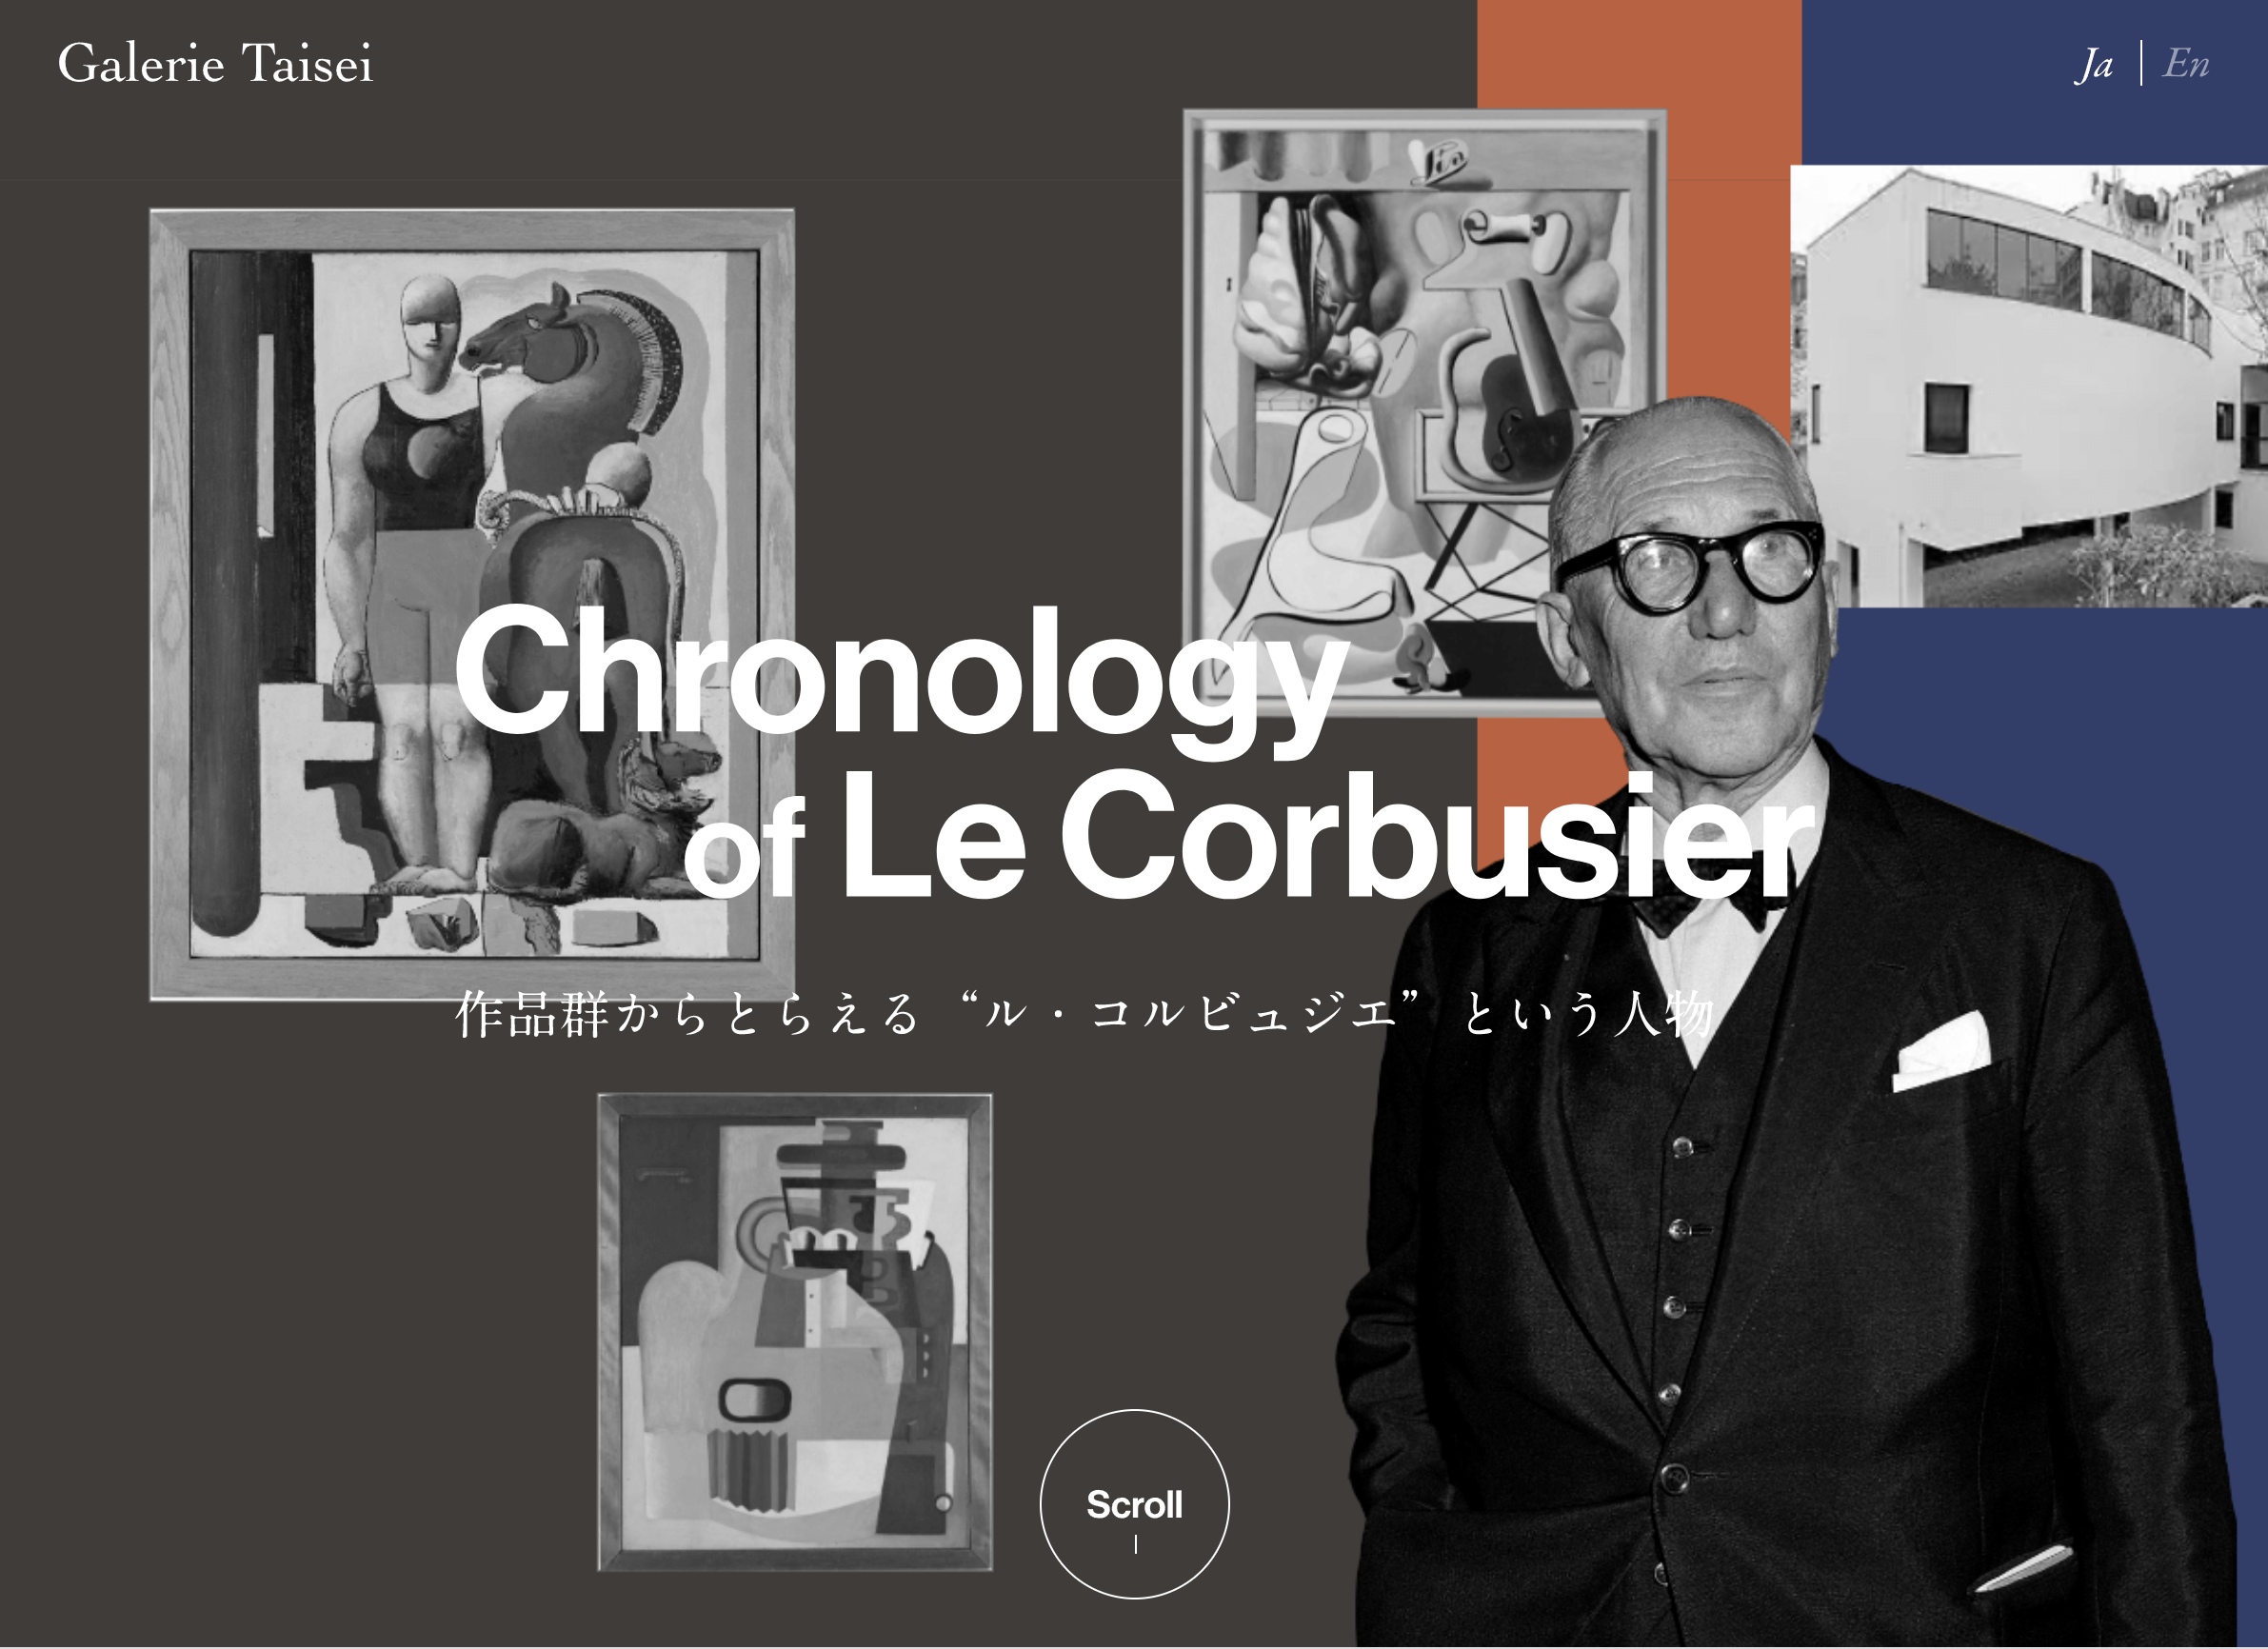 Chronology of Le Corbusier 作品群からとらえる”ル・コルビュジエ 